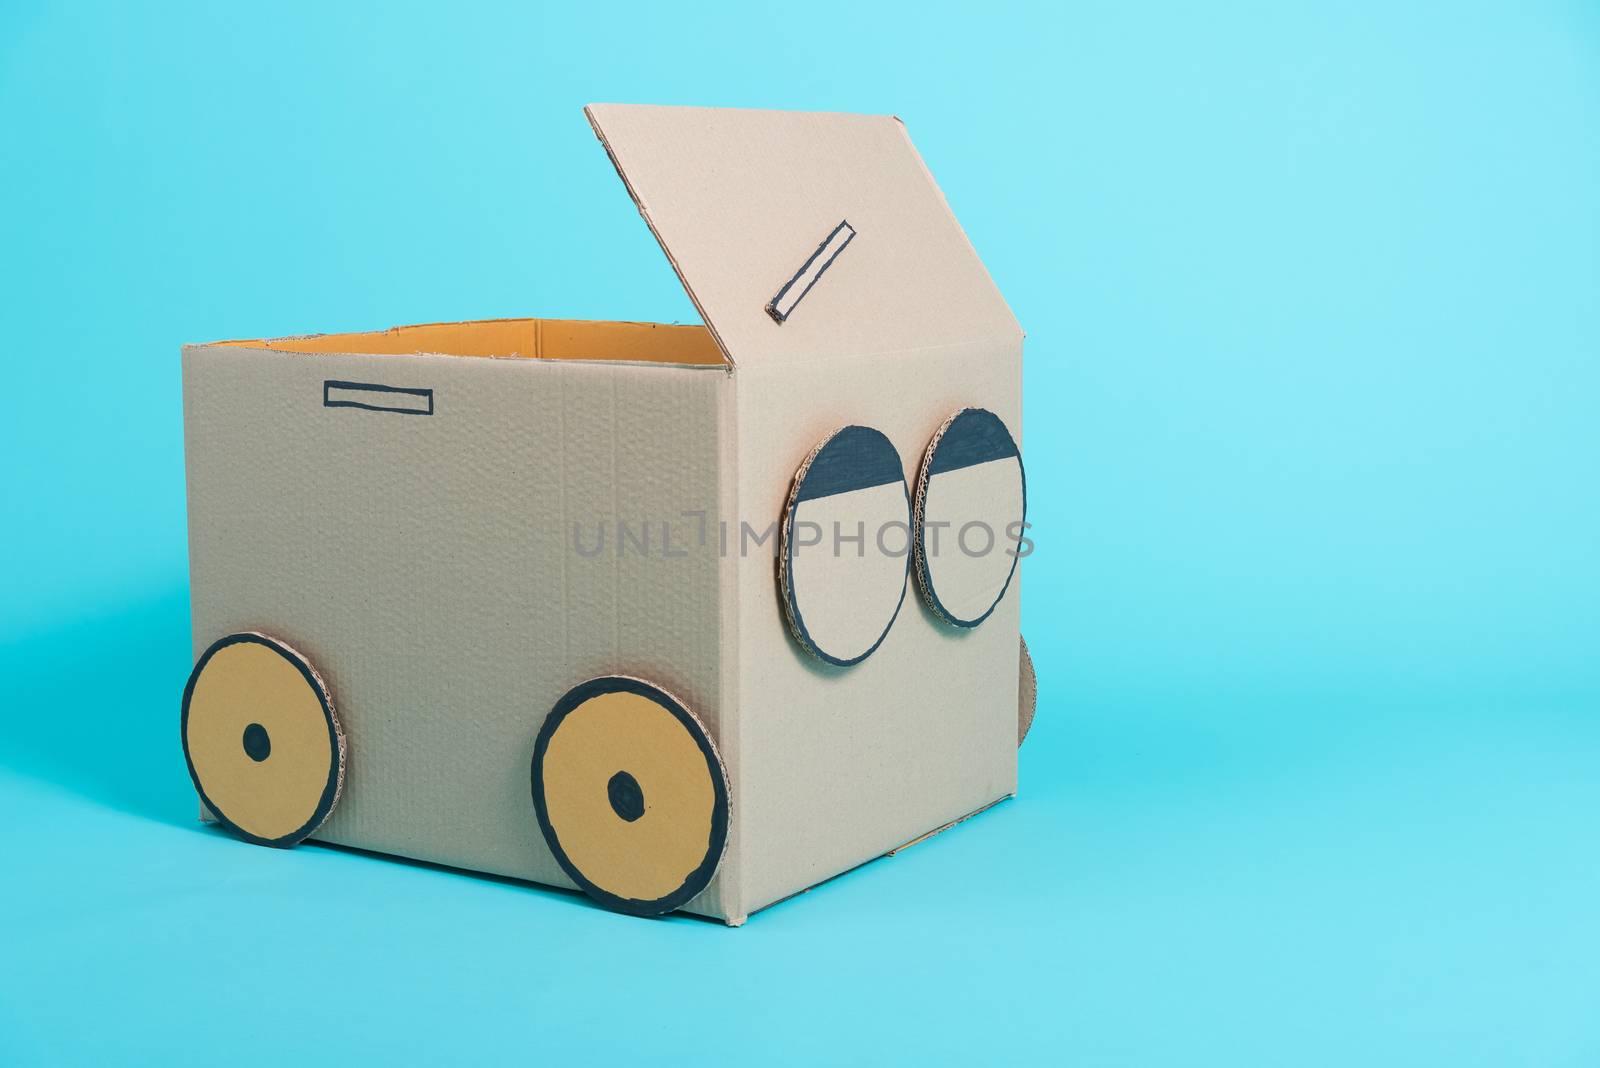 Car creative by a cardboard box imagination by Sorapop